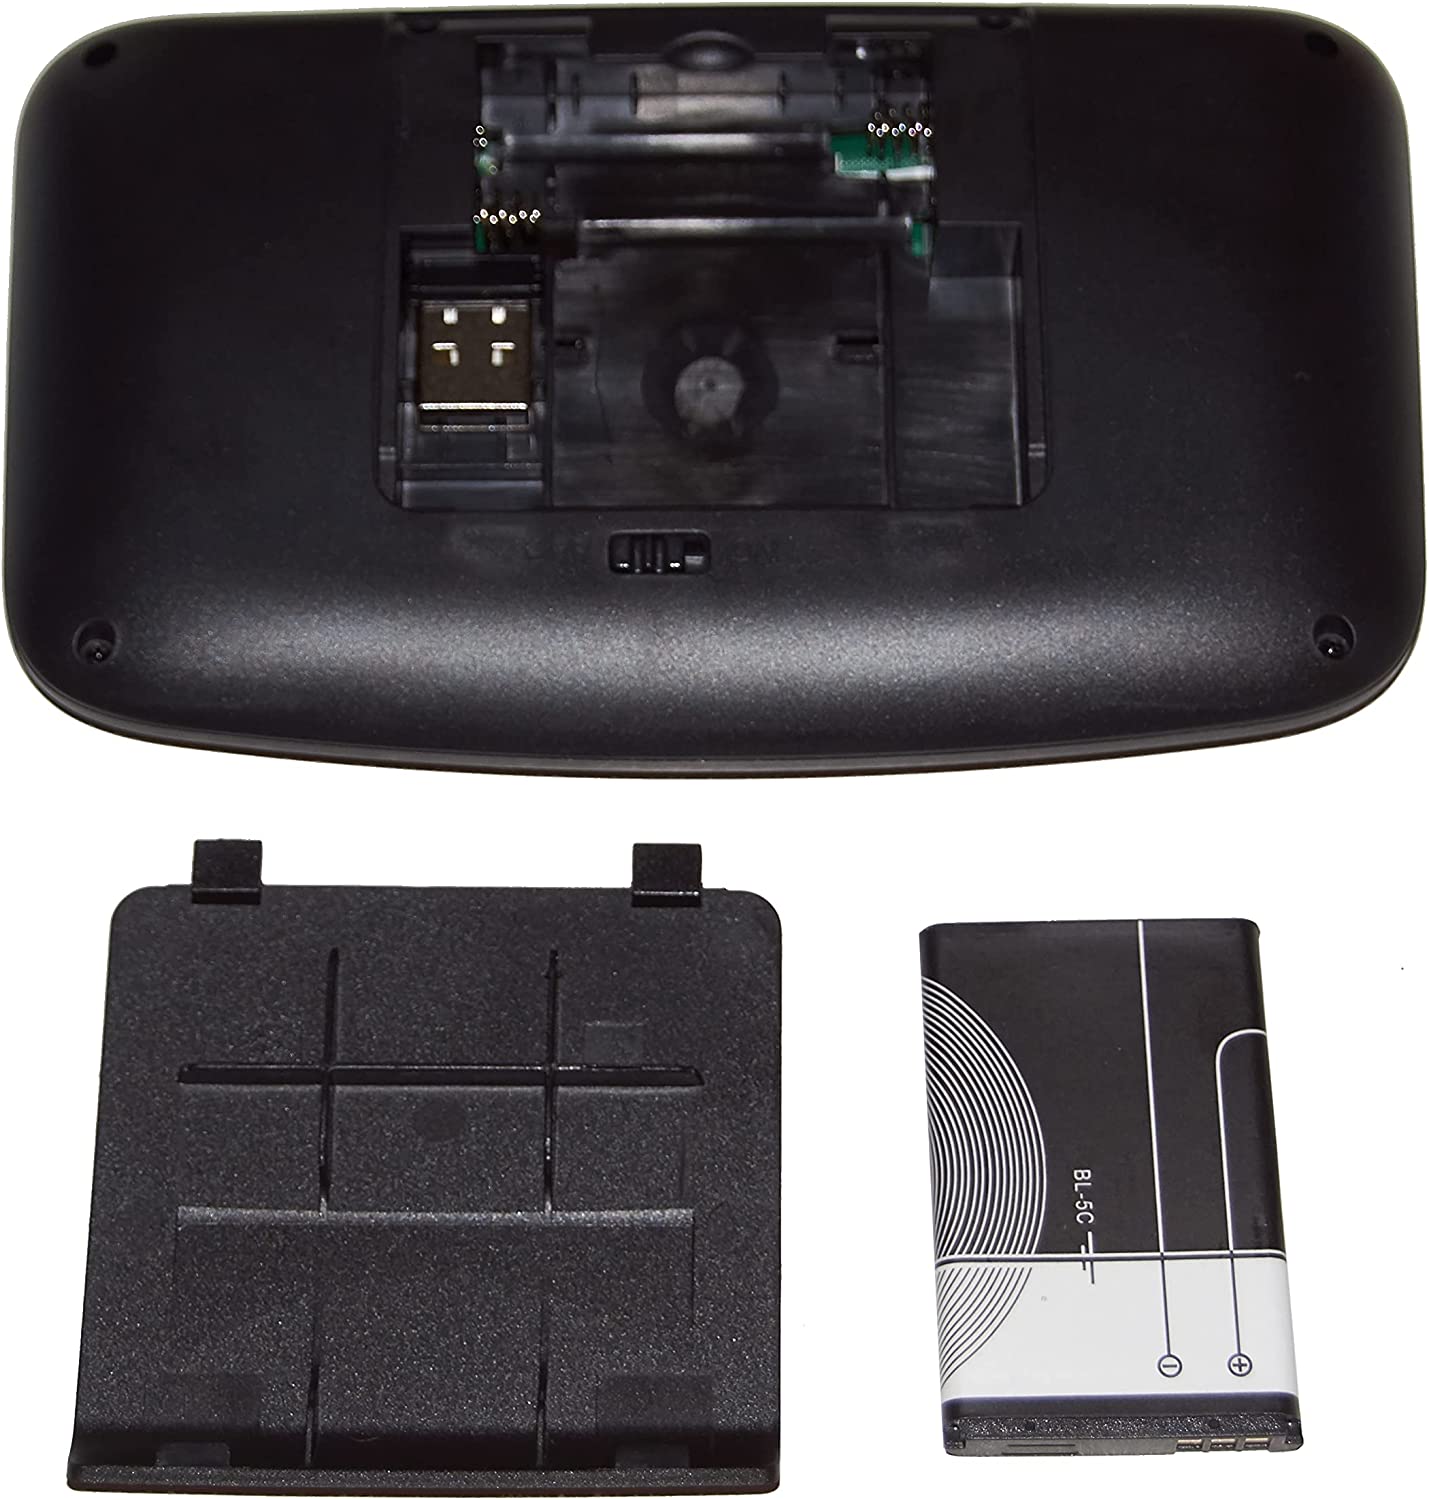 Wireless Mini keyboard with touchpad